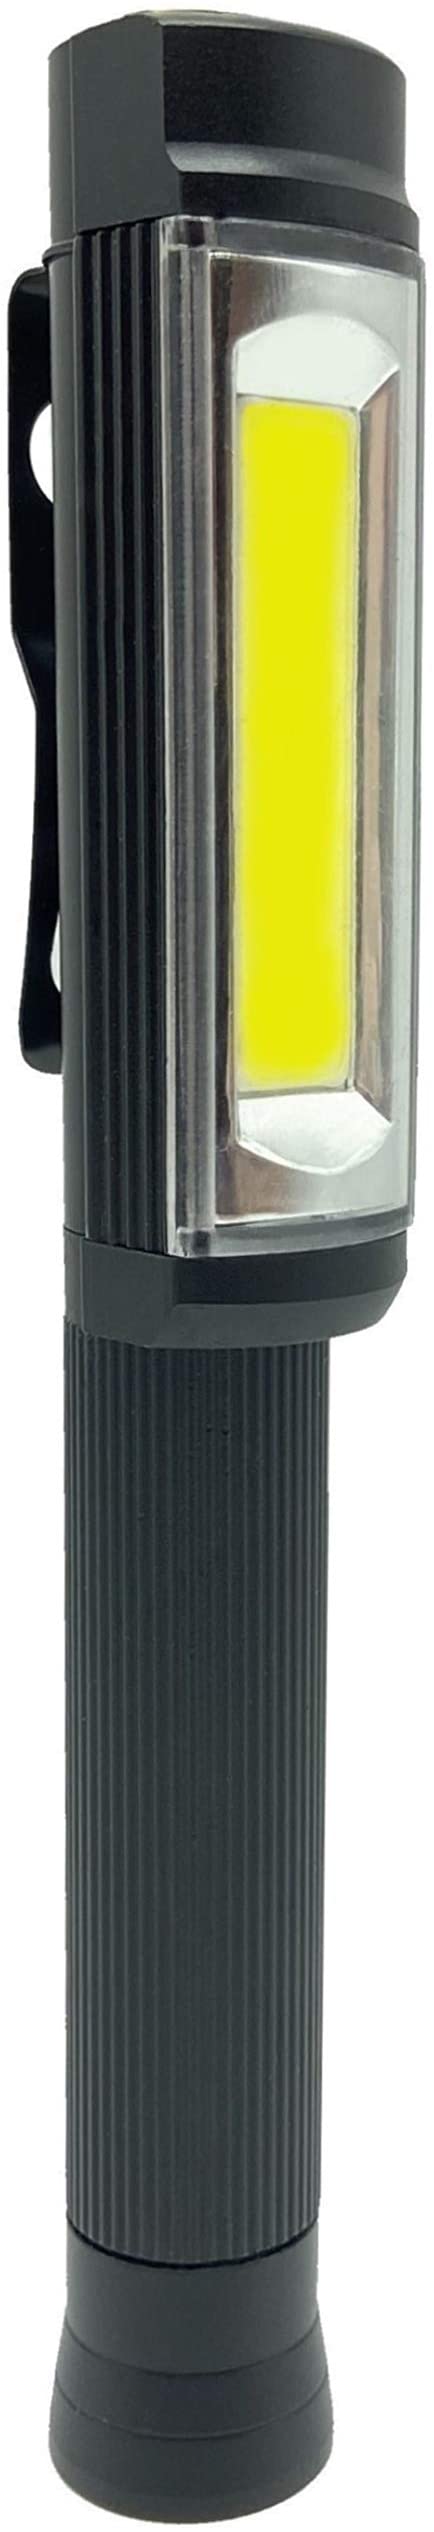 PRO-ELEC COB LED Pocket Work Light, 400 Lumens COB Magnetic Flashlight with Magnet Base, Steel Clip and Aluminum Body, Car Emergency Mechanic Inspection Pen Flood Beam Flash Light, Battery Operated